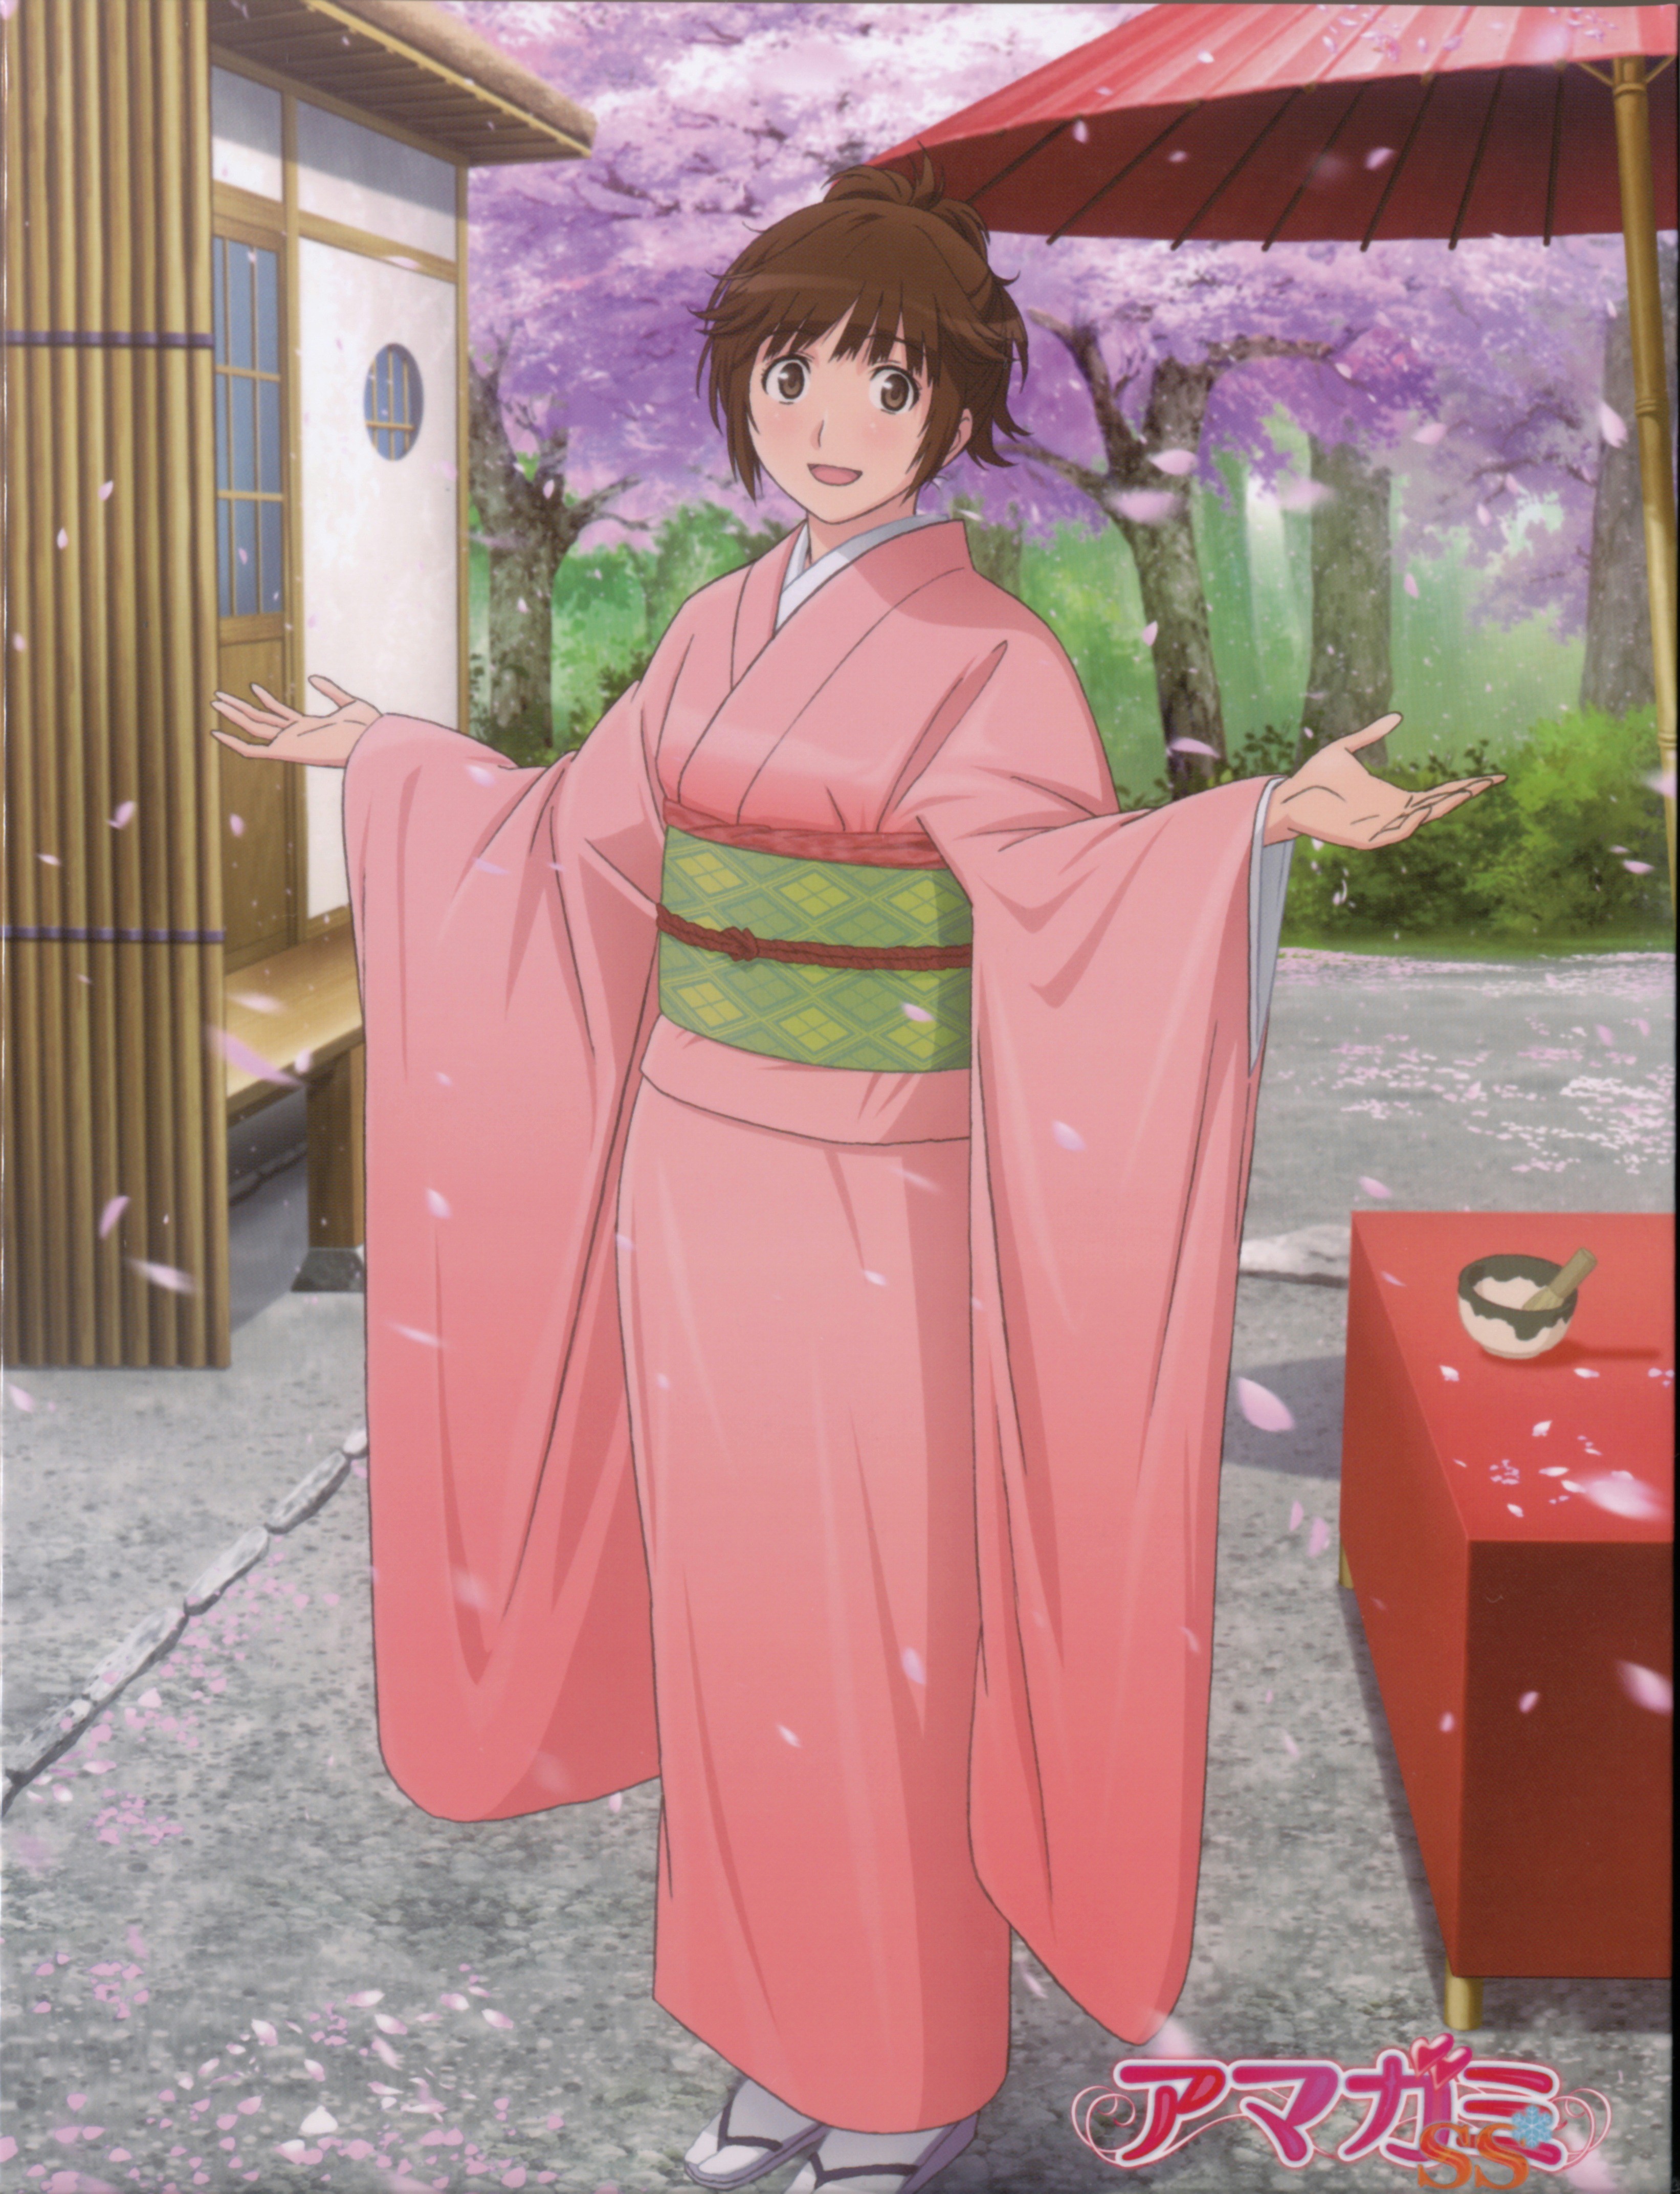 Amagami SS Anime Girls Sakurai Rihoko 3284x4288